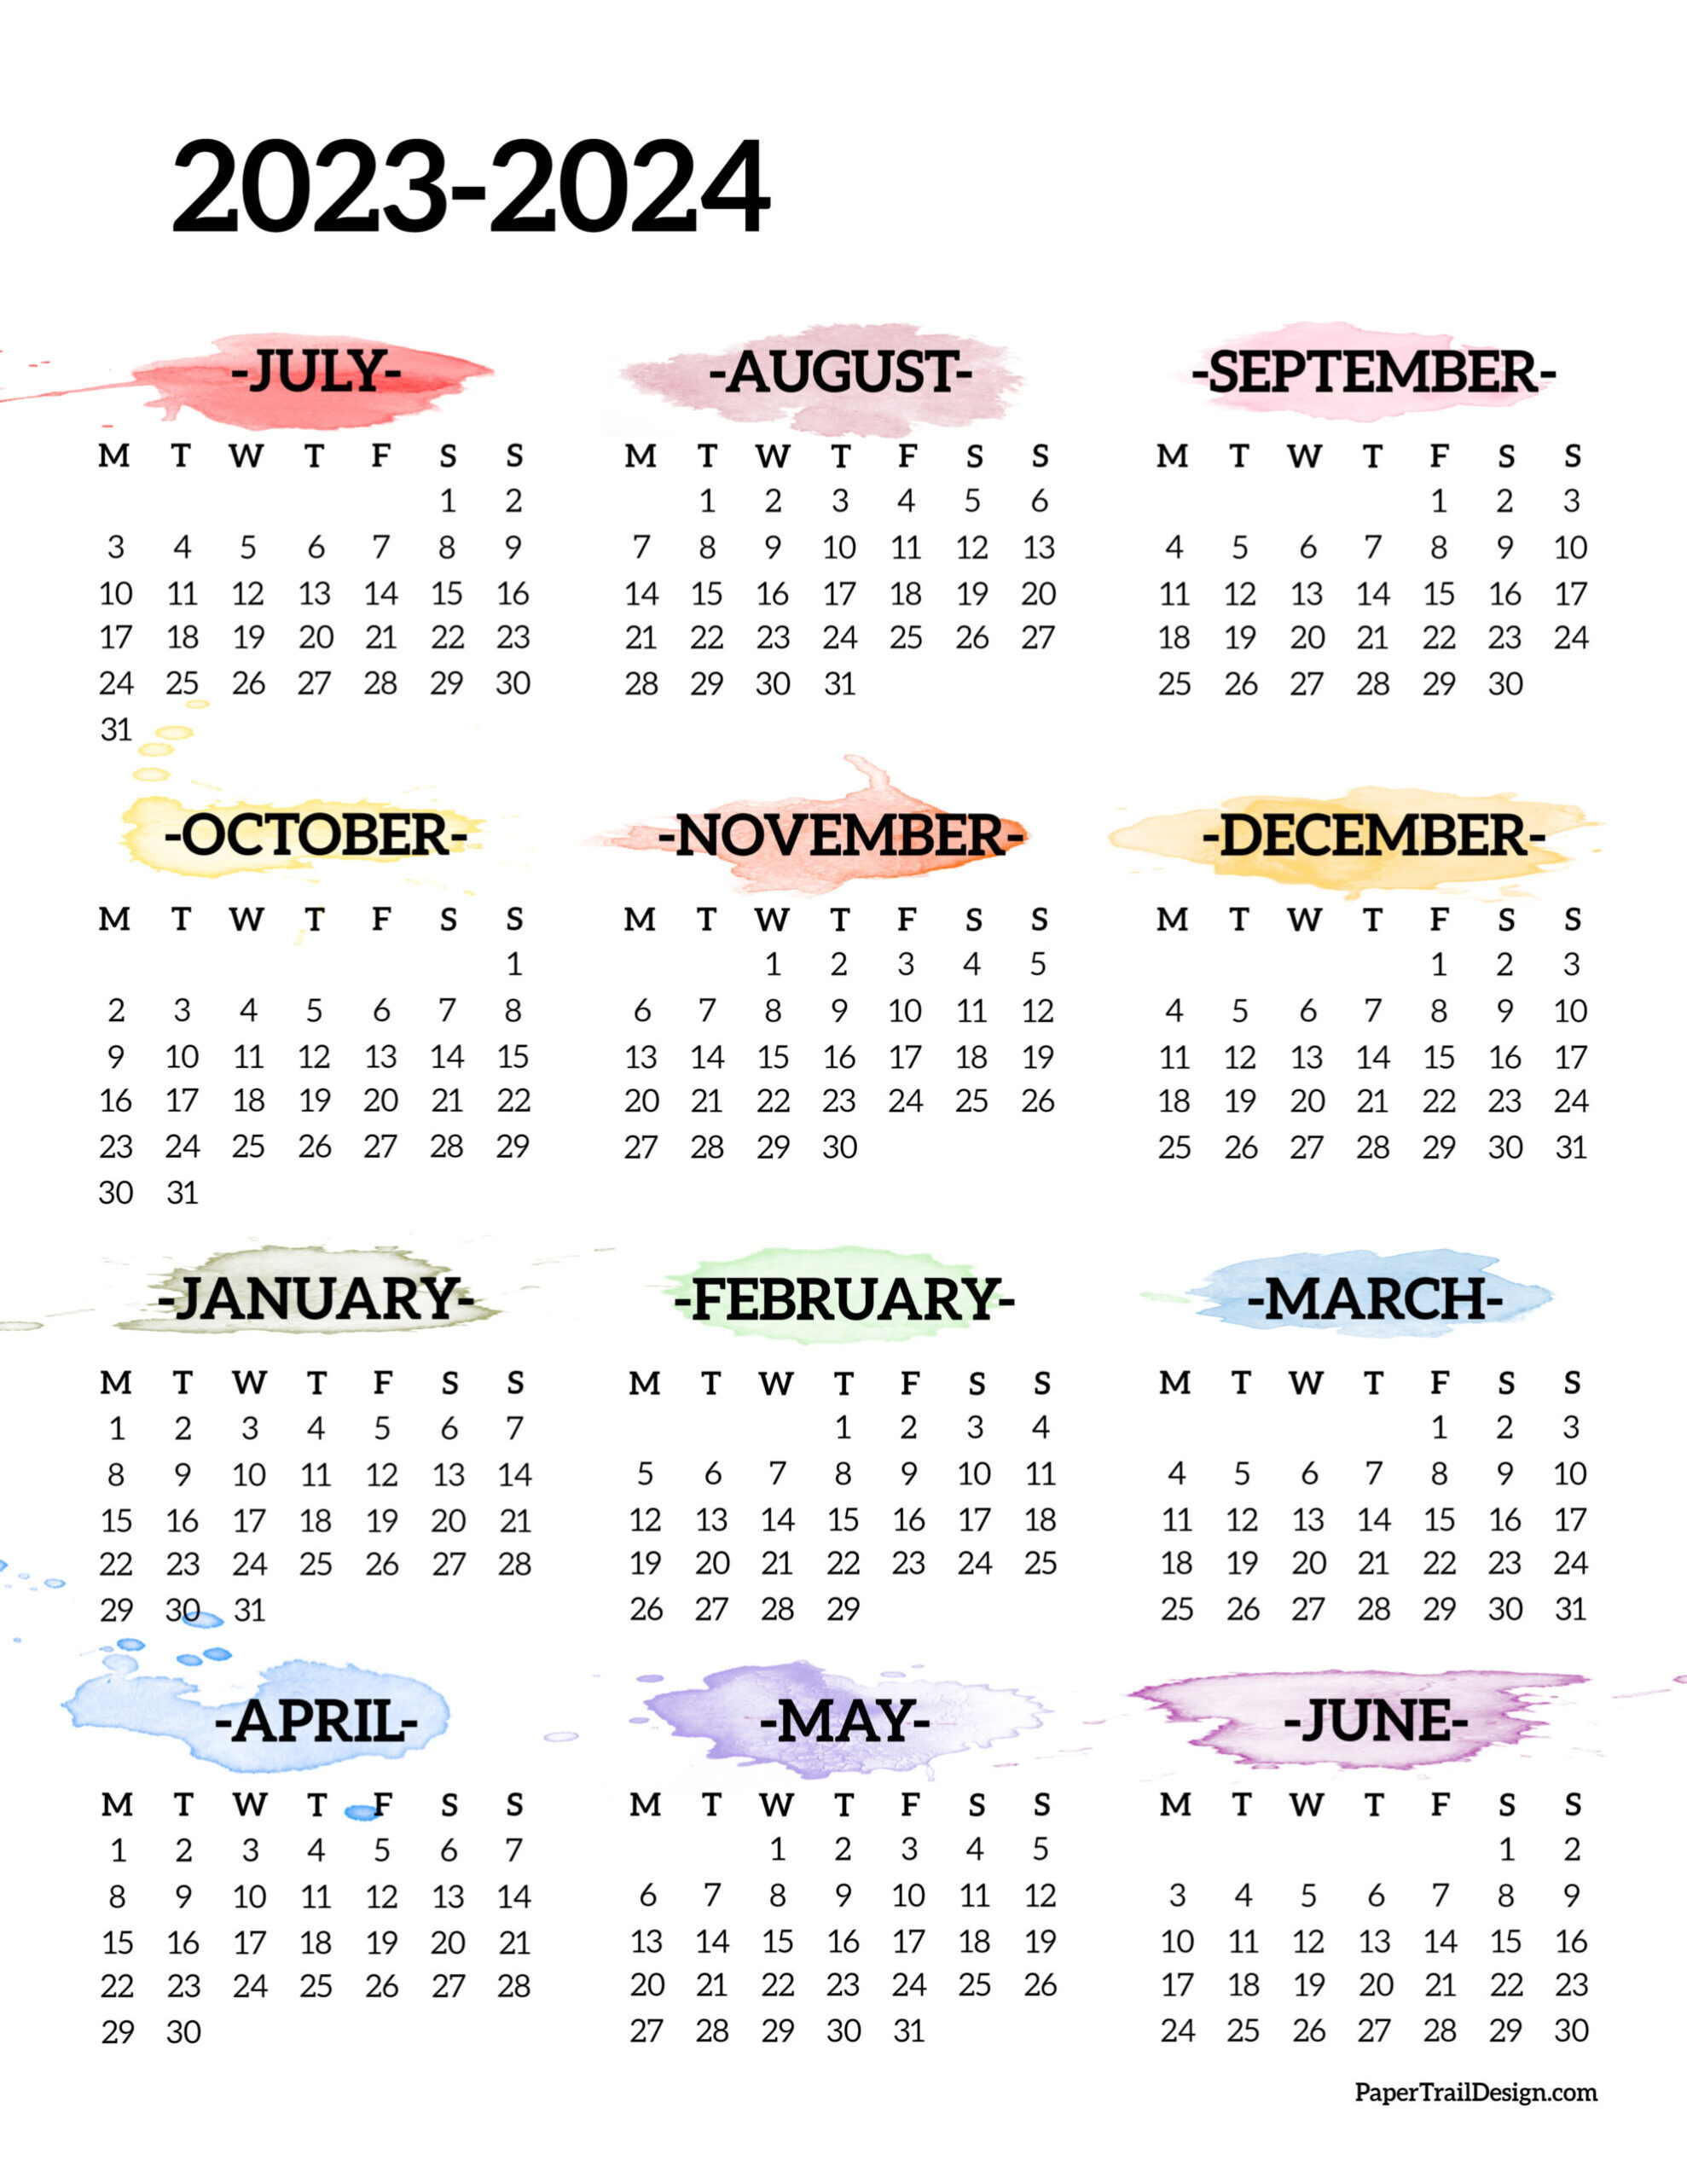 2023-2024 School Year Calendar Free Printable - Paper Trail Design for Printable July 2023 - June 2024 Calendar